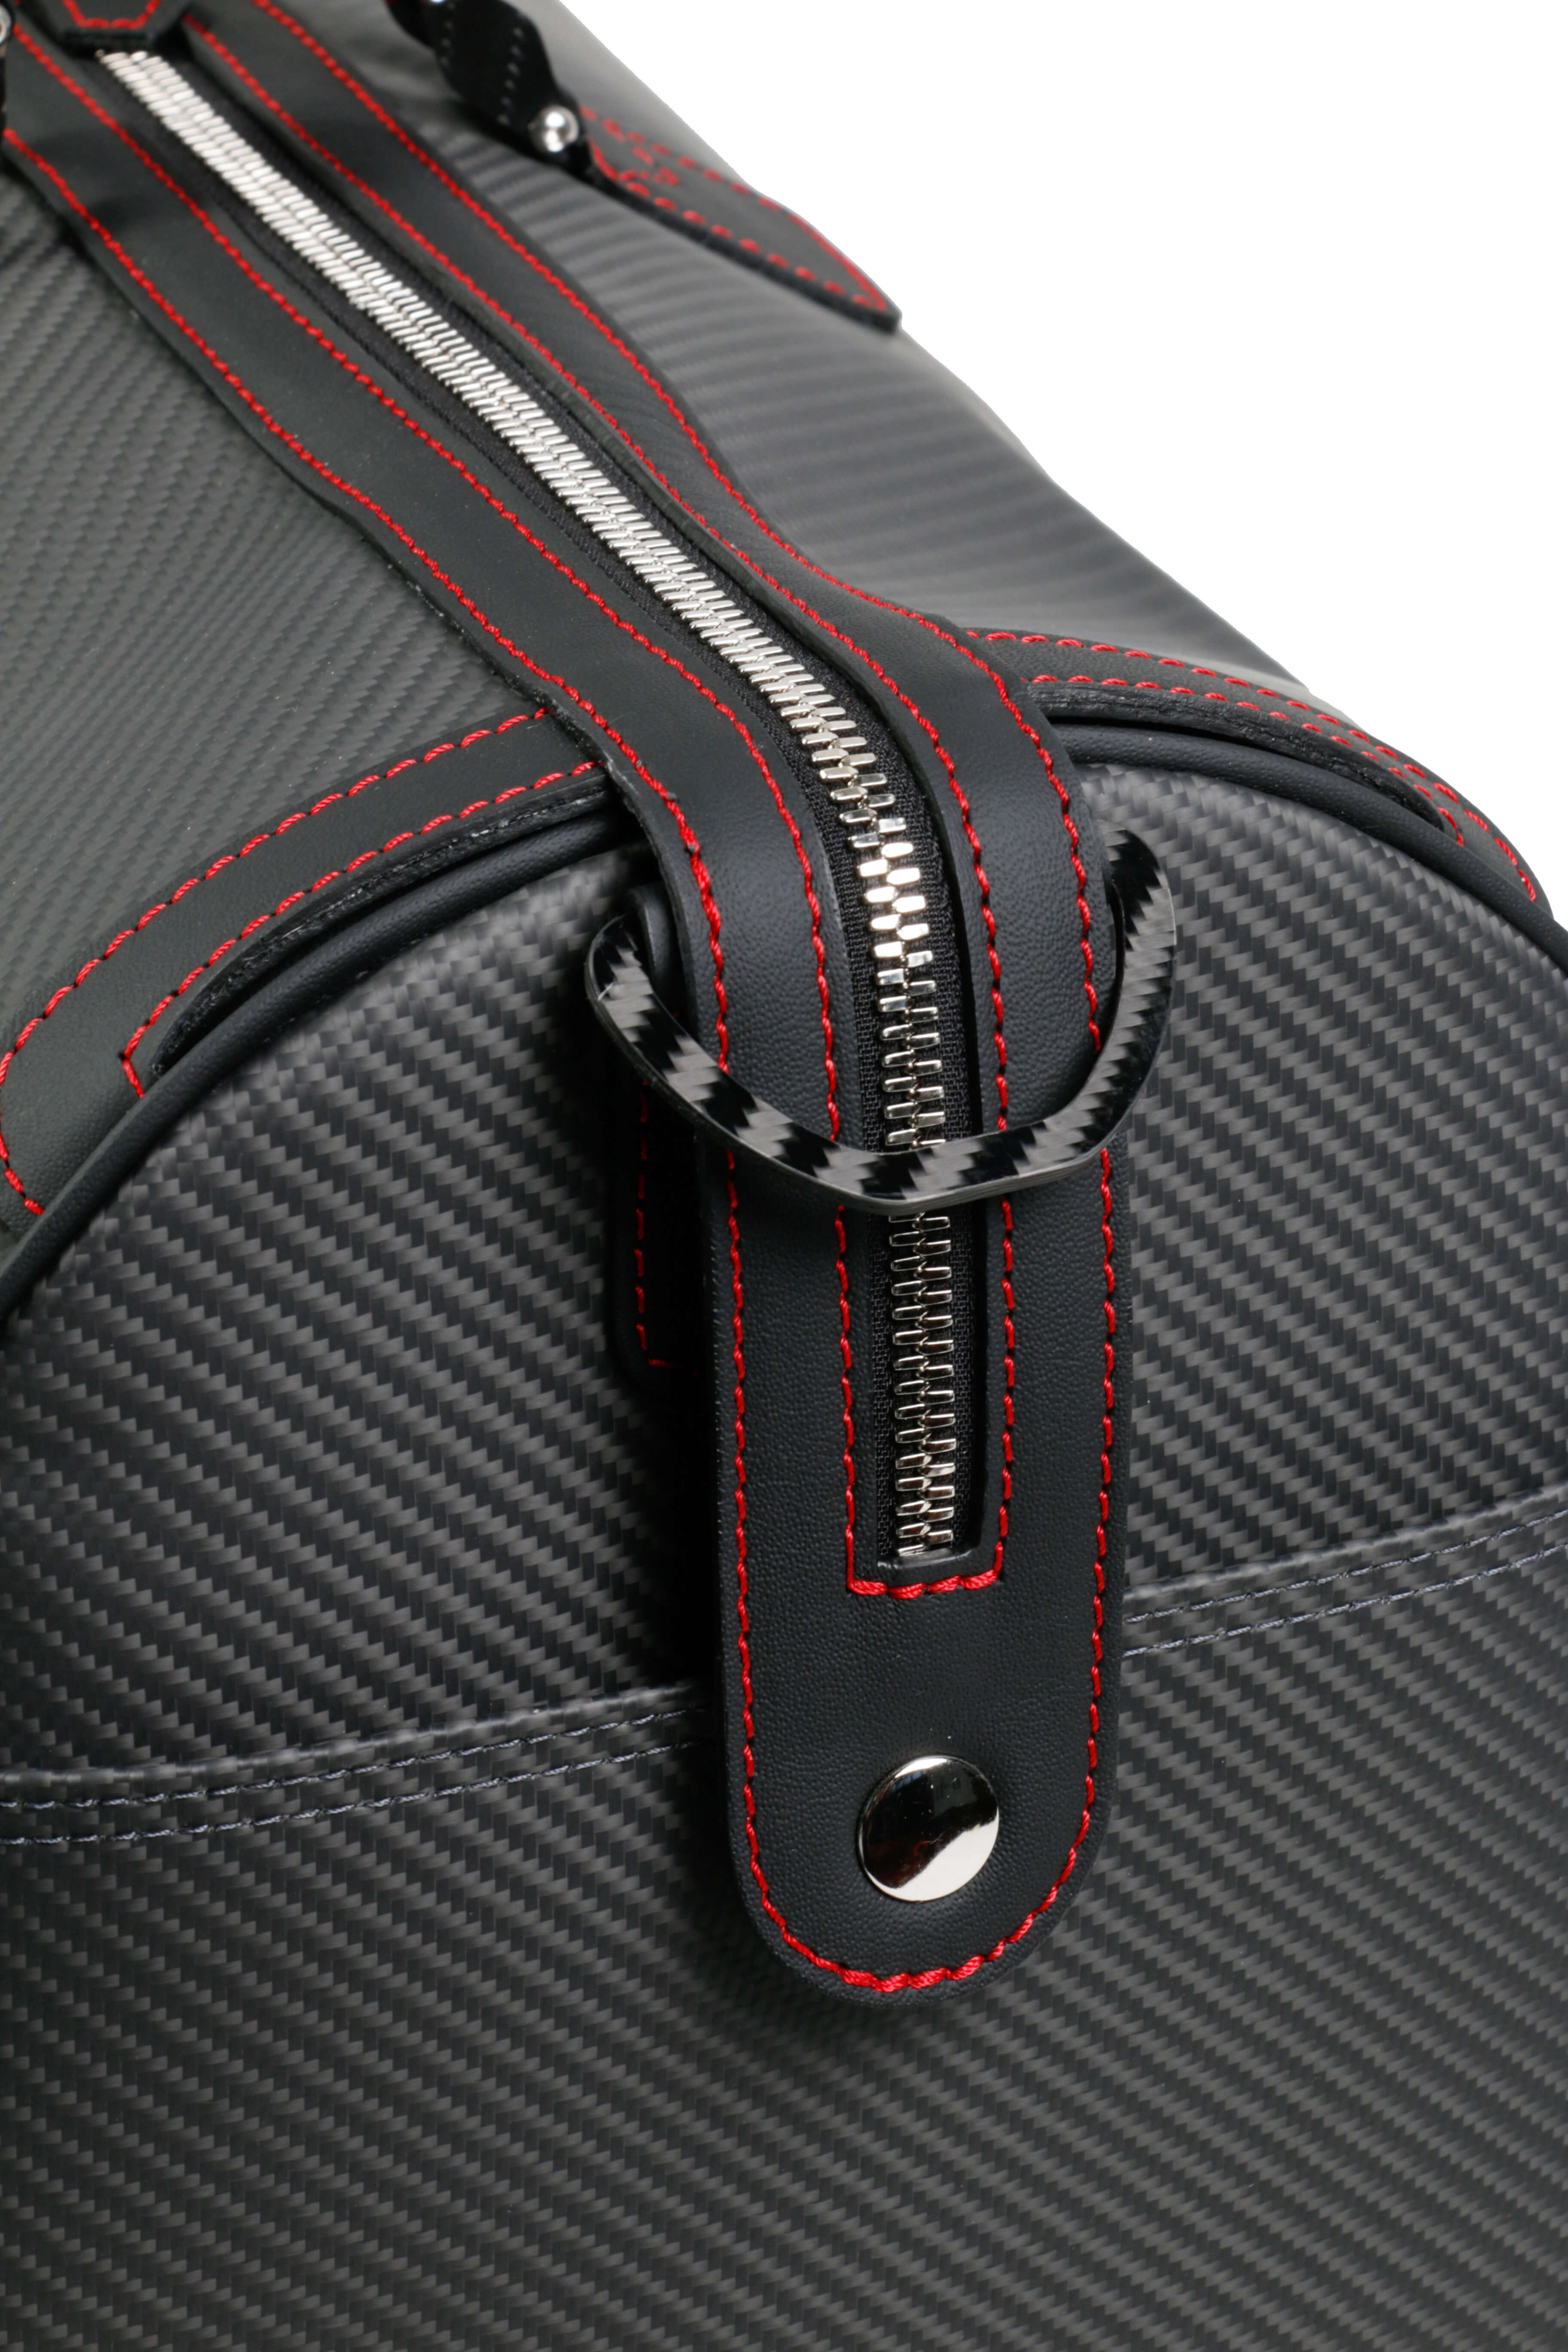 Matrik Soft Carbon Fiber Duffle Bag, Red Stitching